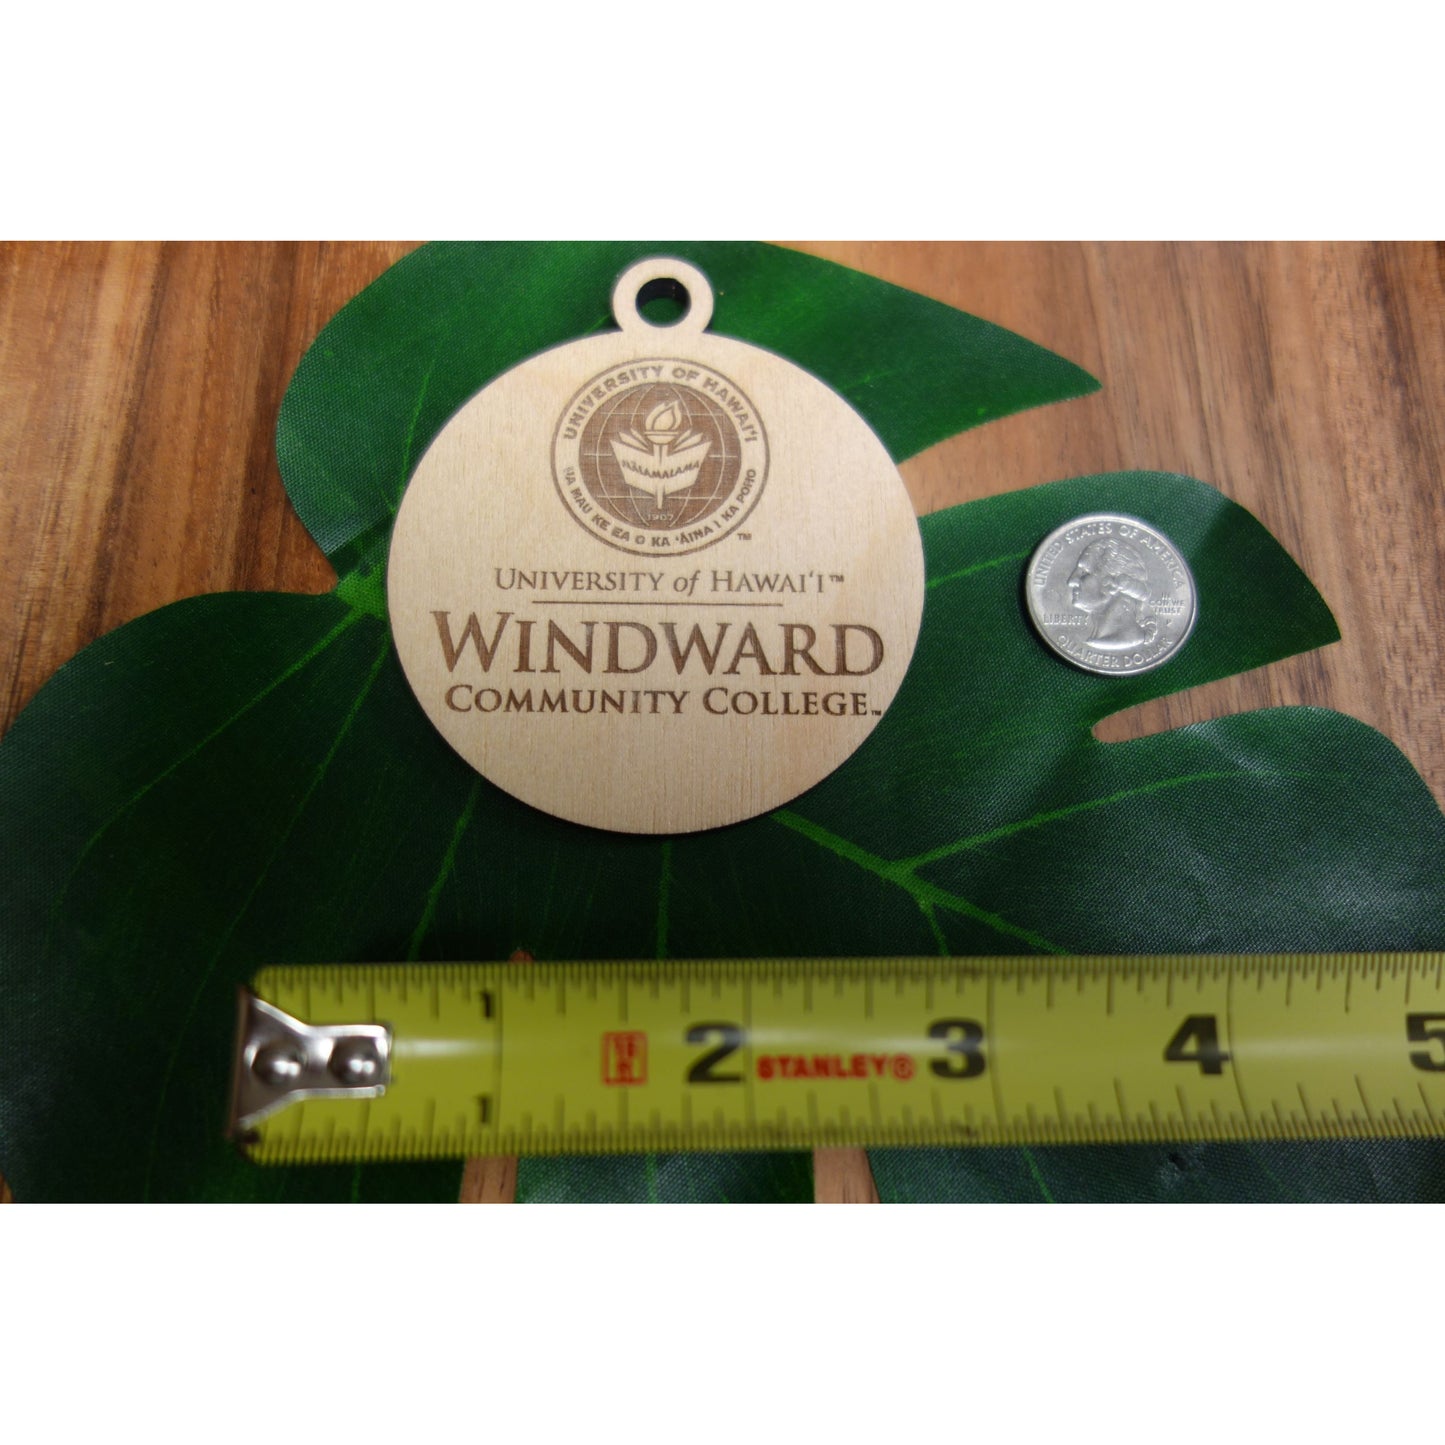 Officially Licensed University of Hawaii Windward Community College Keepsake Ornament